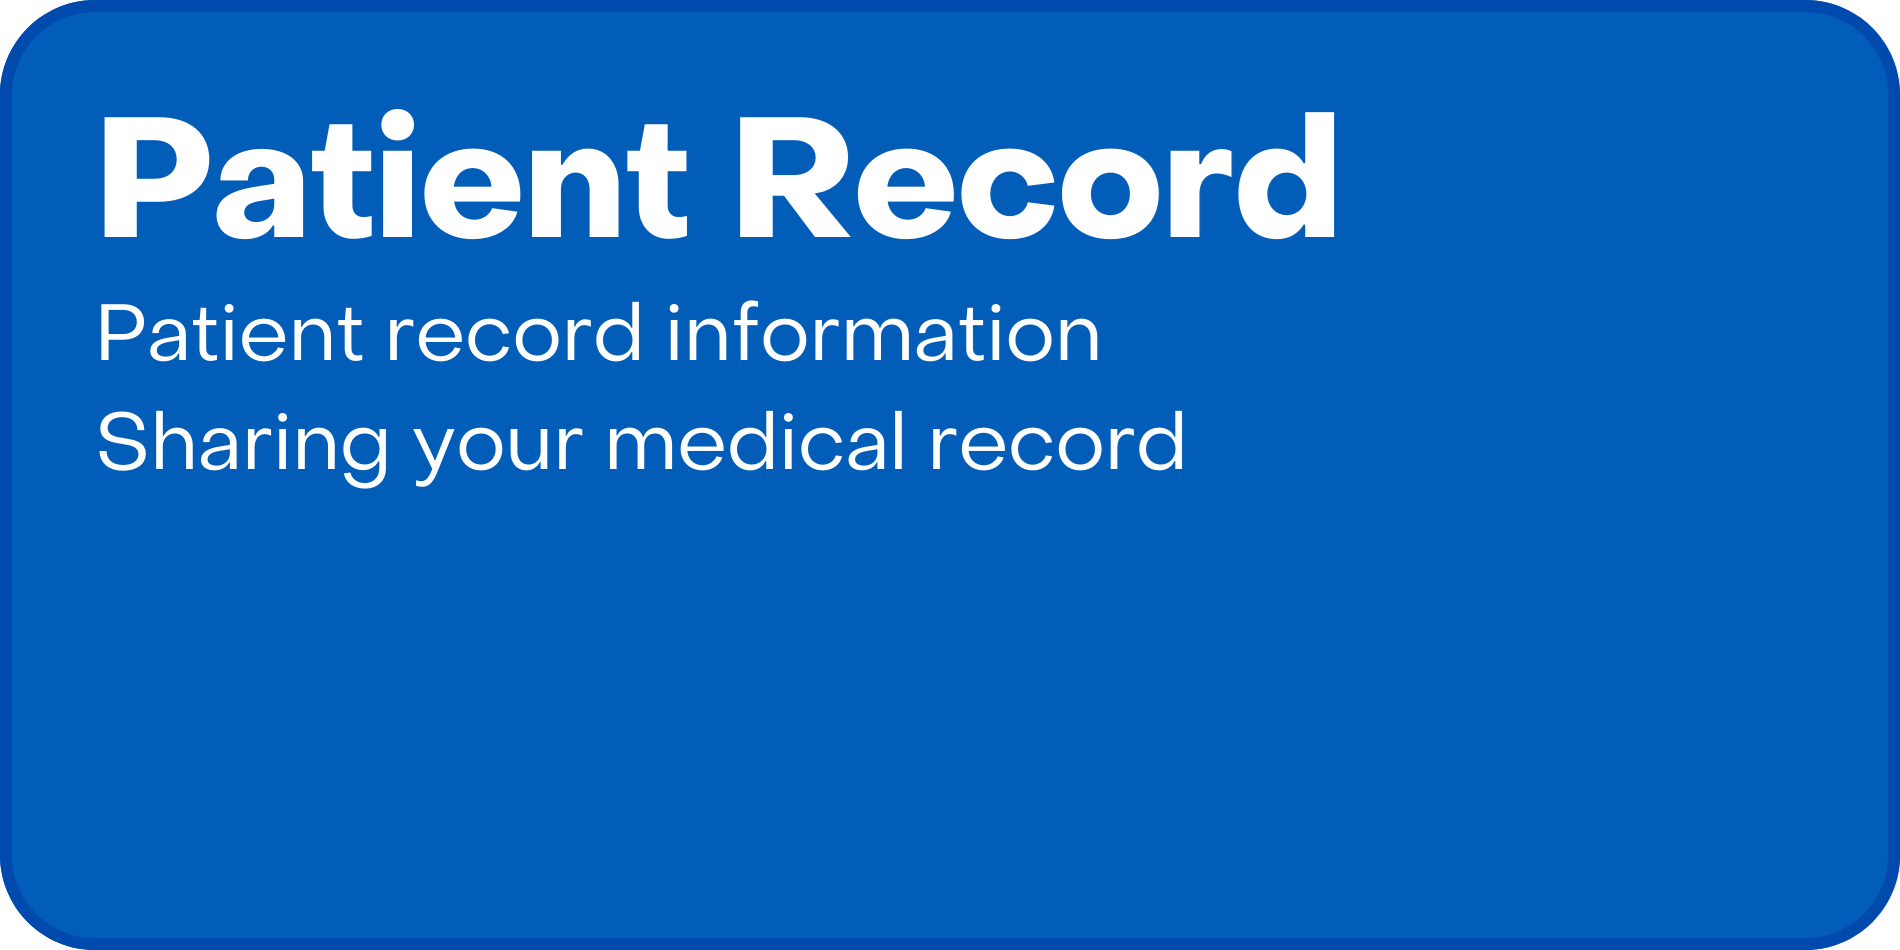 Patient Record